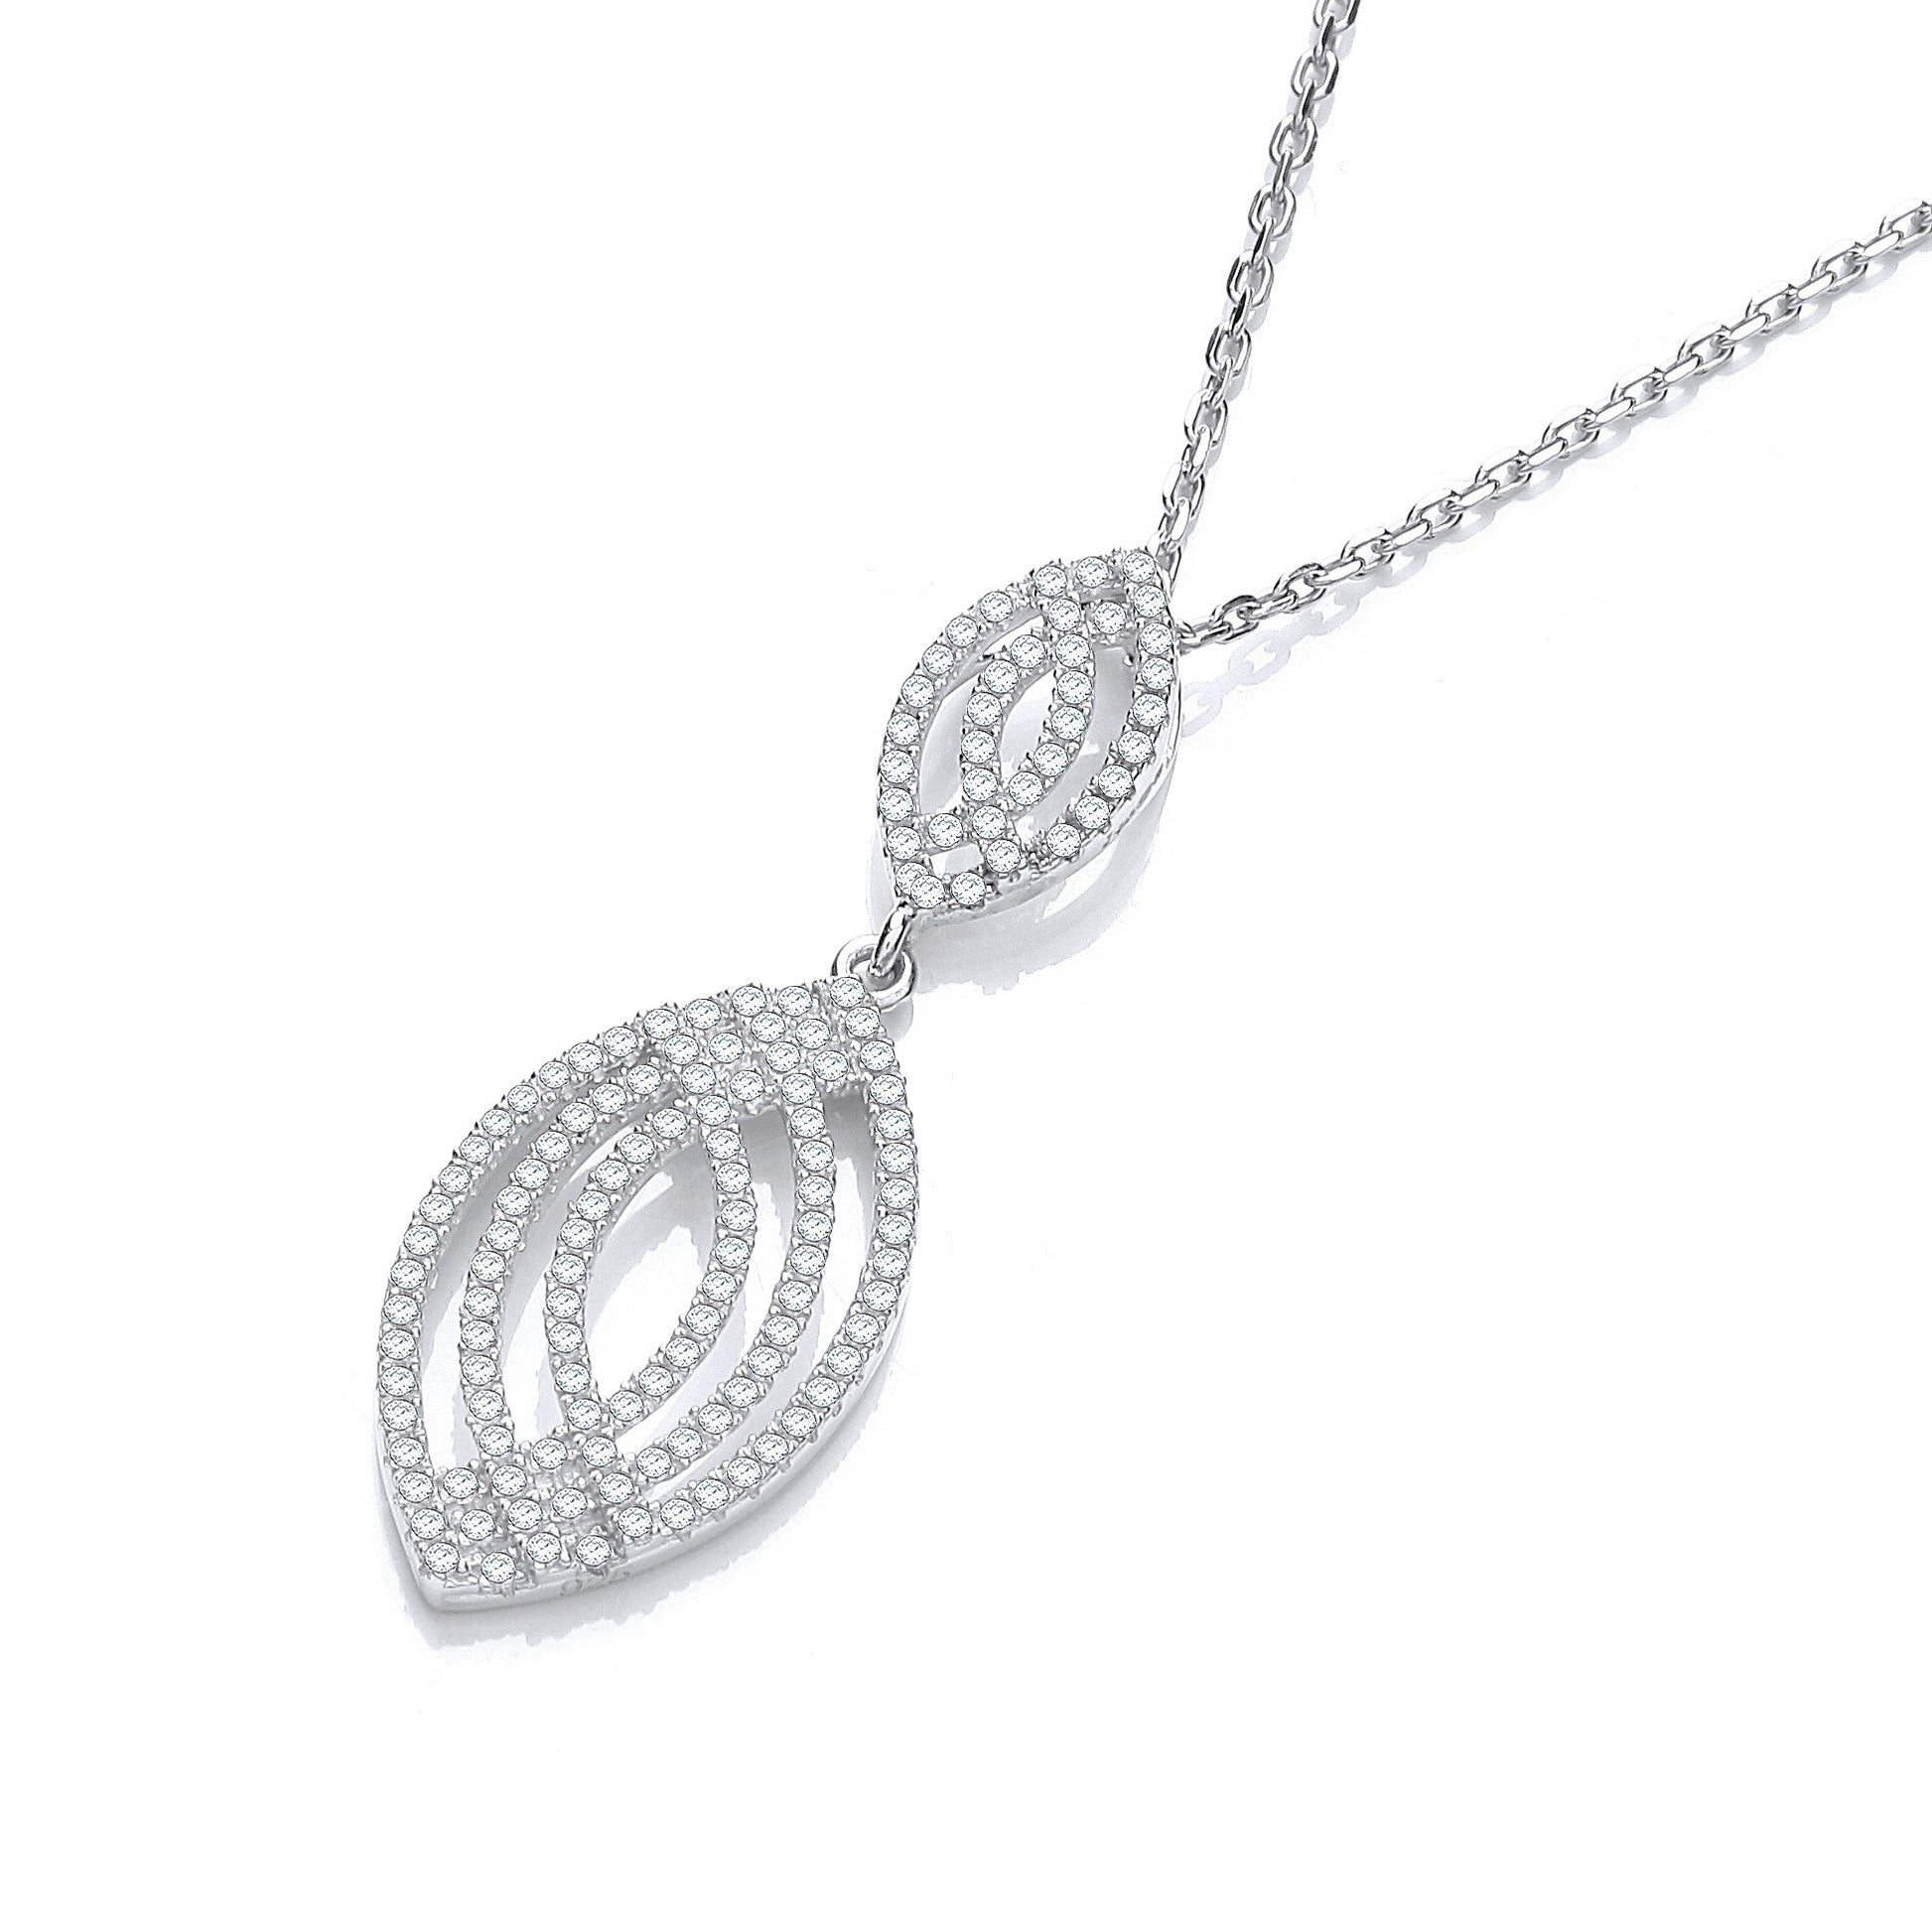 925 Sterling Silver Drop Pendant Belchar Chain Necklace - FJewellery